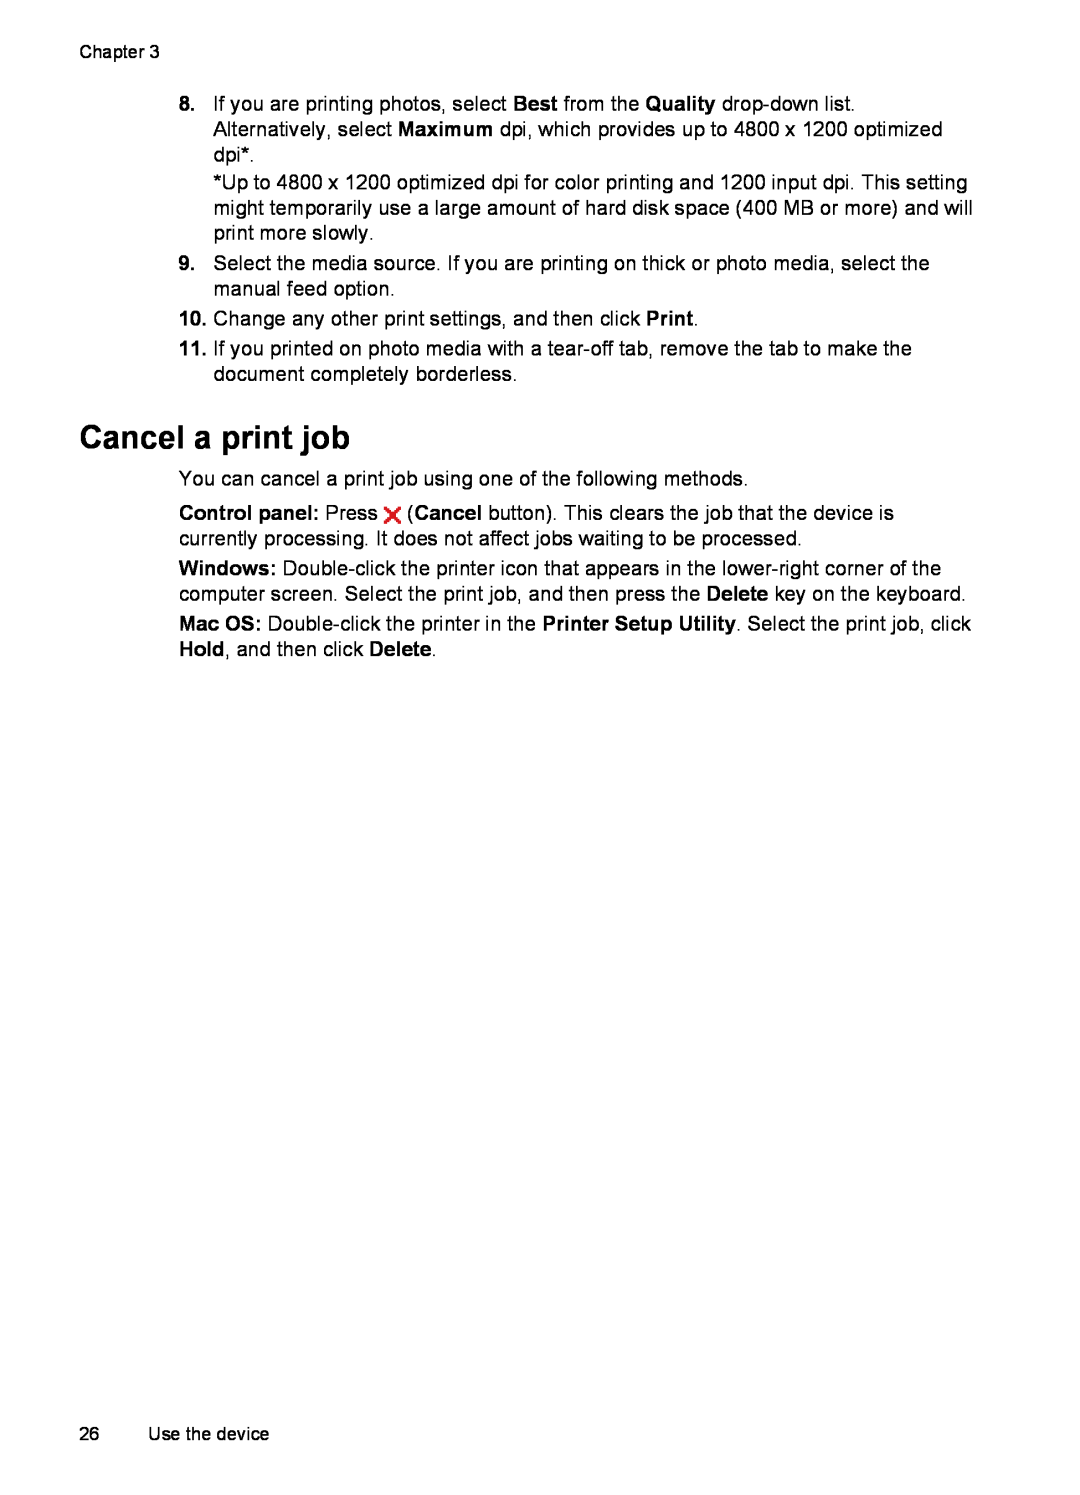 HP Pro K5400, K5300 manual Cancel a print job 